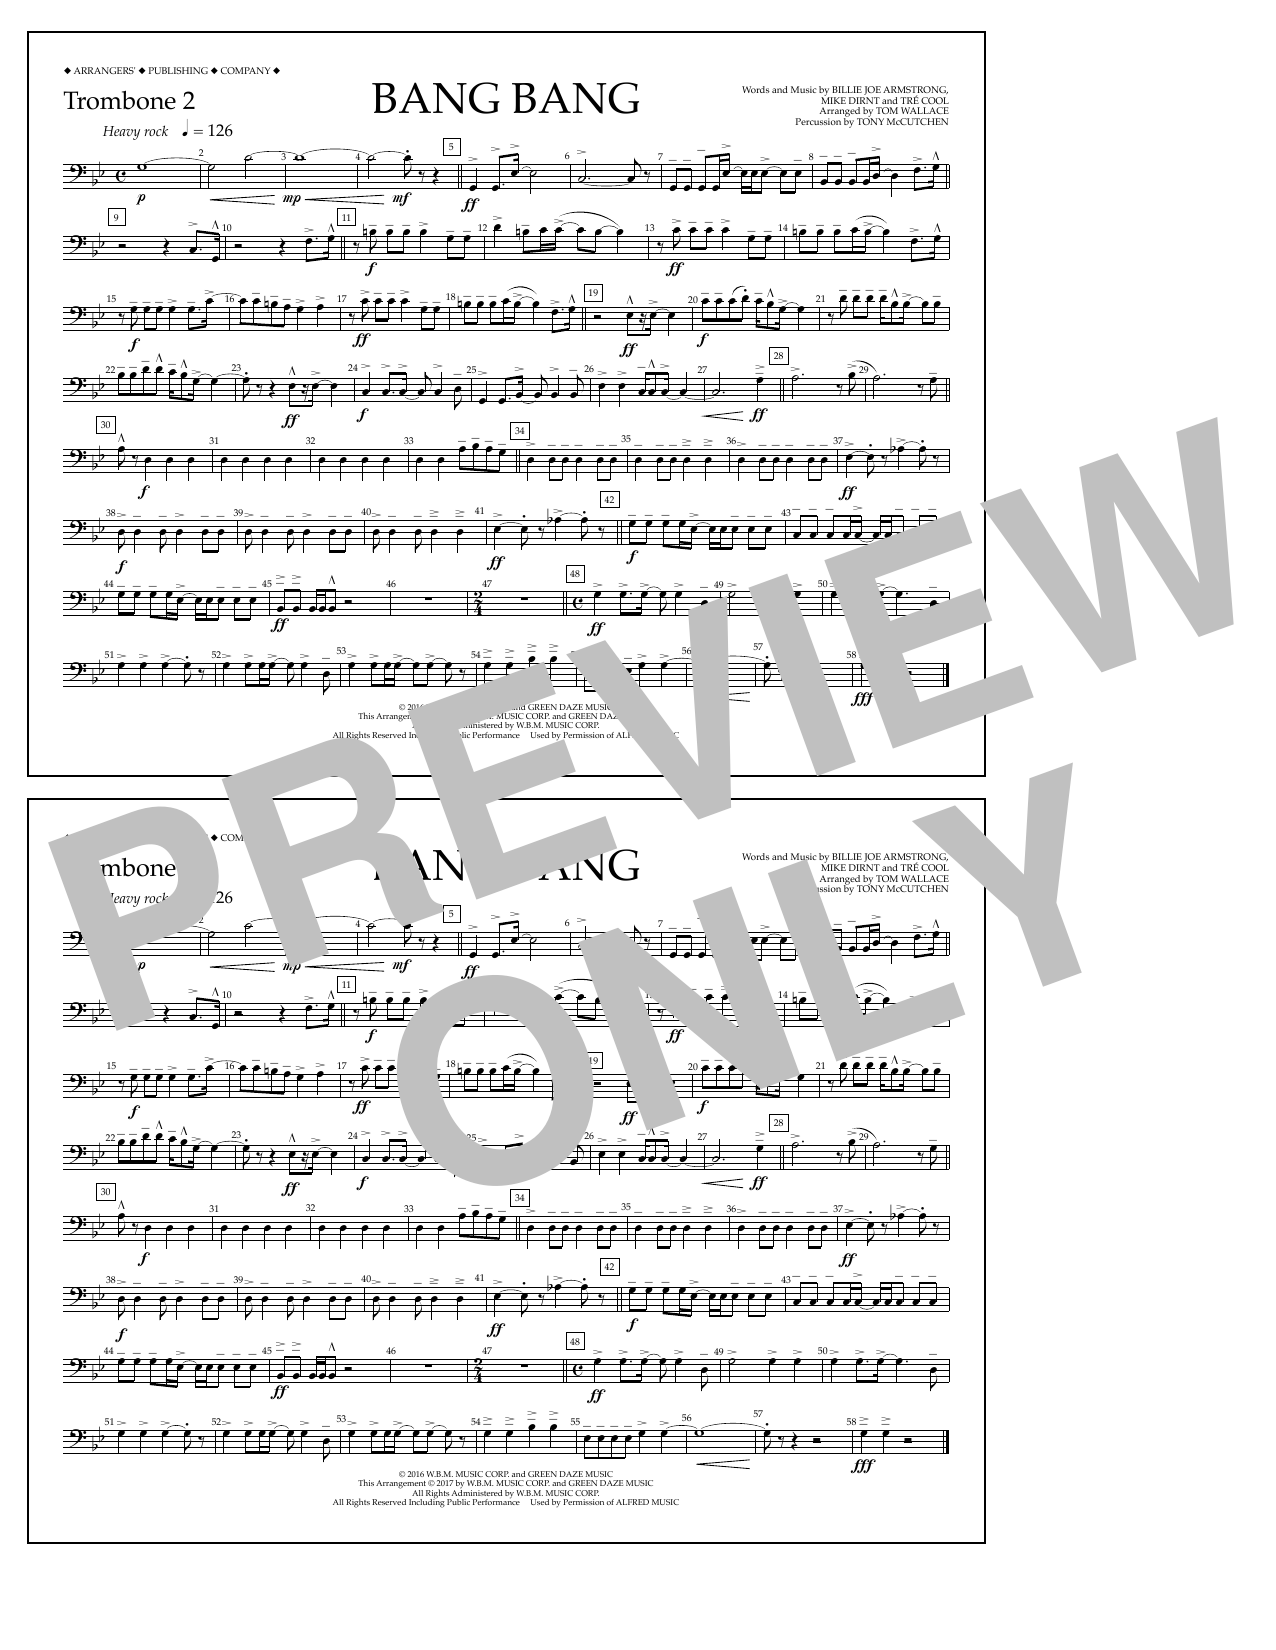 Tom Wallace Bang Bang - Trombone 2 Sheet Music Notes & Chords for Marching Band - Download or Print PDF